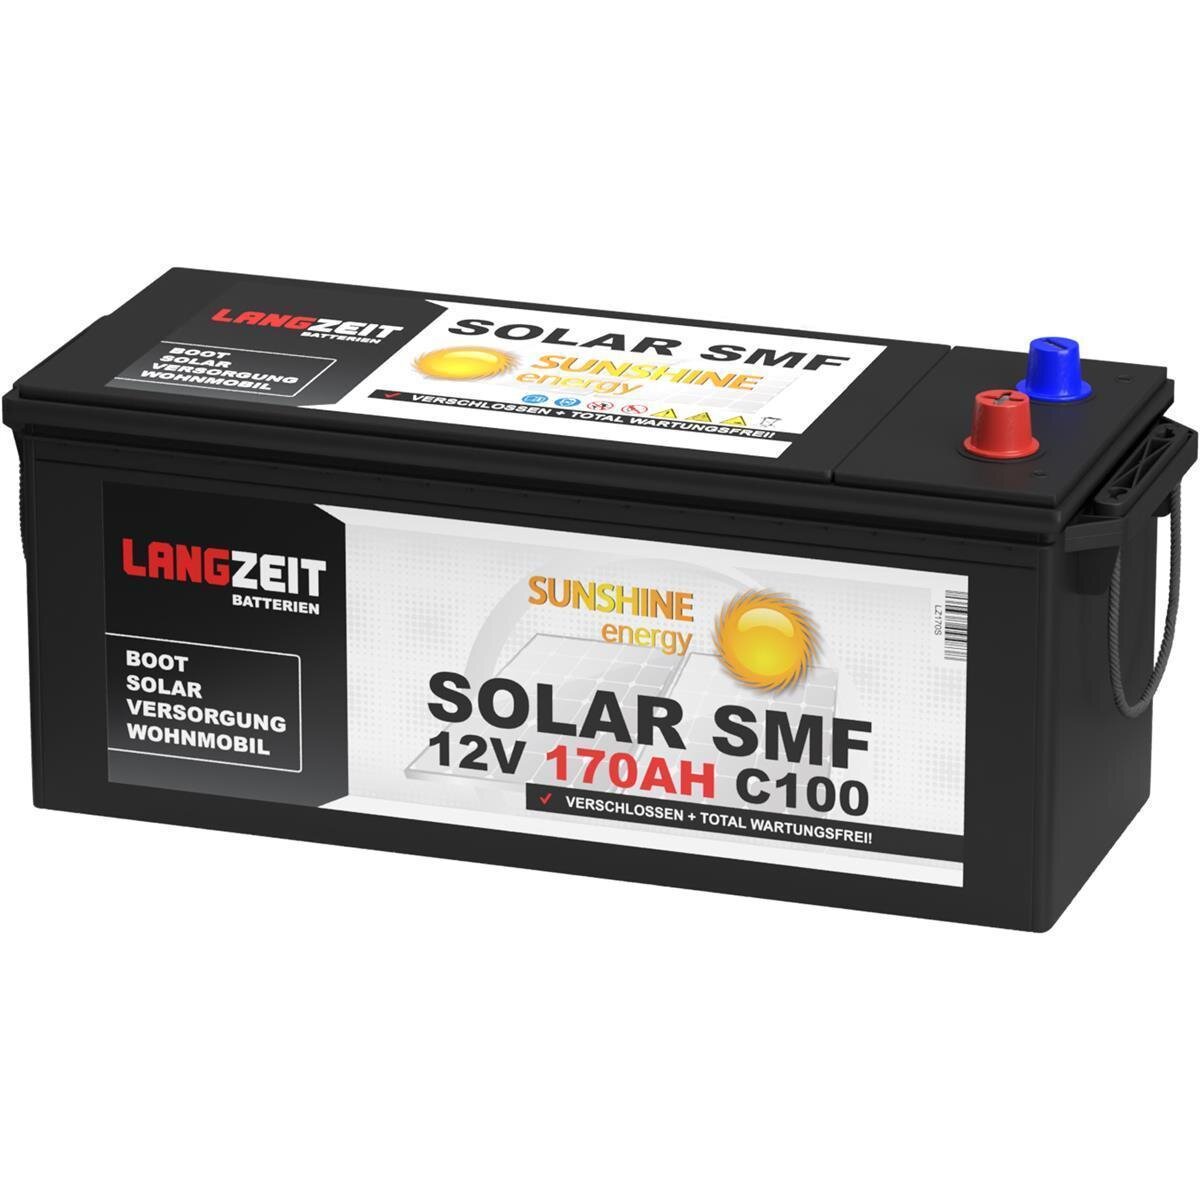 EXAKT Solar DCS Solarbatterie 280Ah 12V, 269,95 €